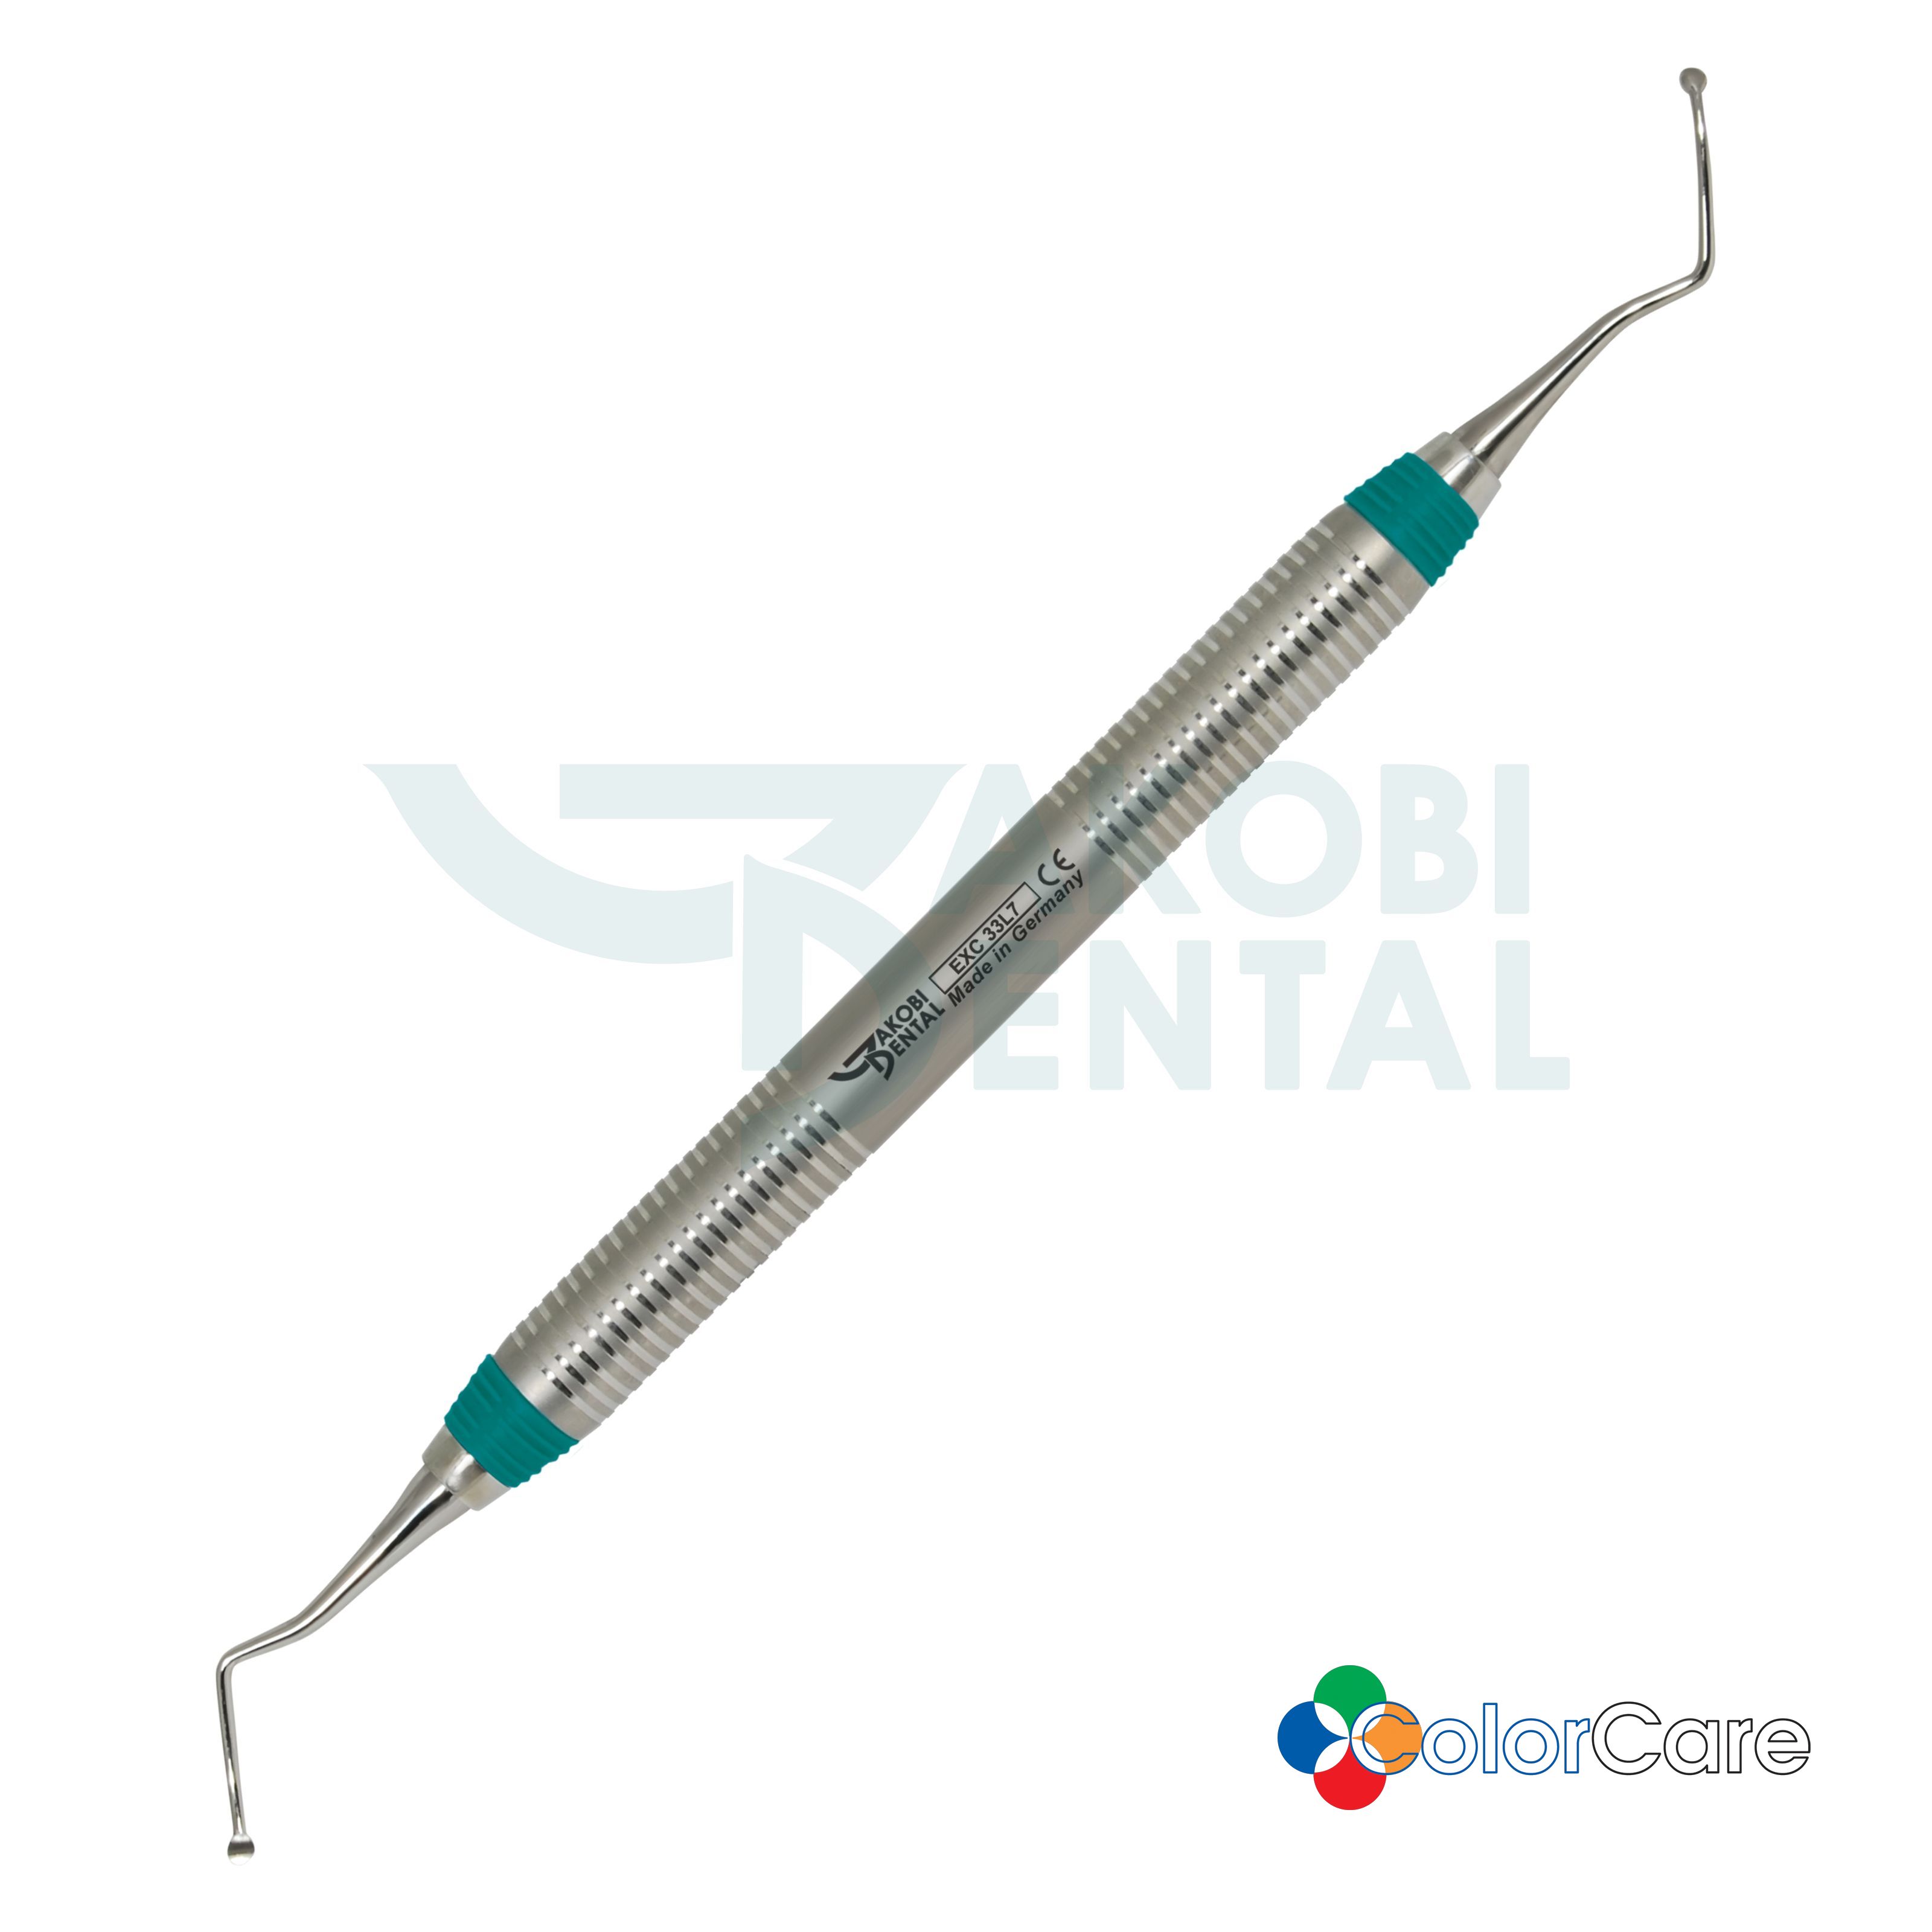 Endodontic Excavator EXC 33L, ColorCare Handle # 7